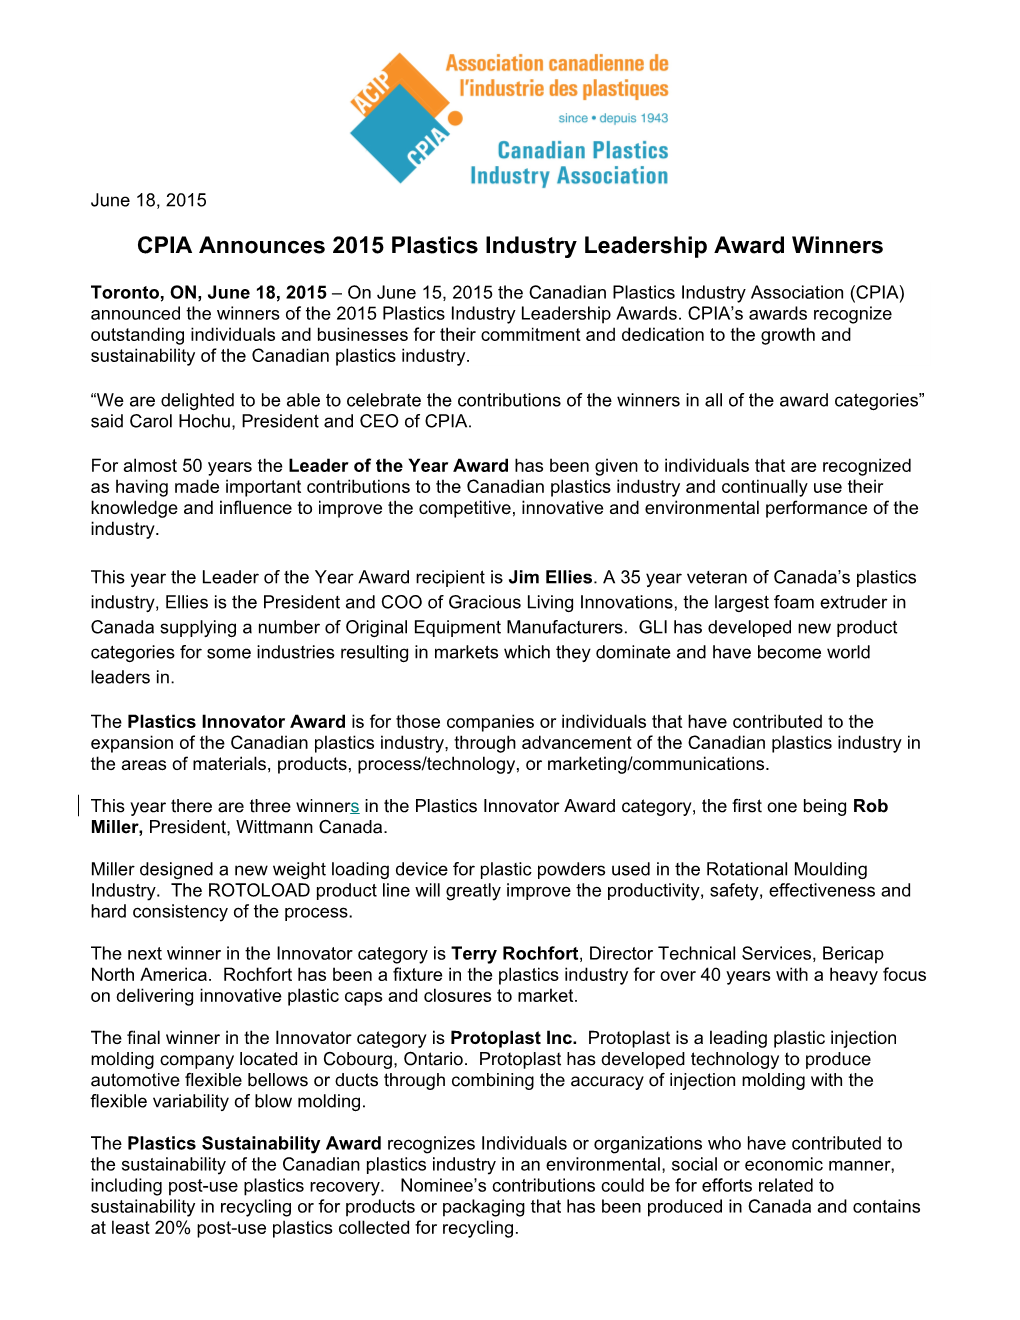 CPIA Announces 2015 Plastics Industryleadership Award Winners